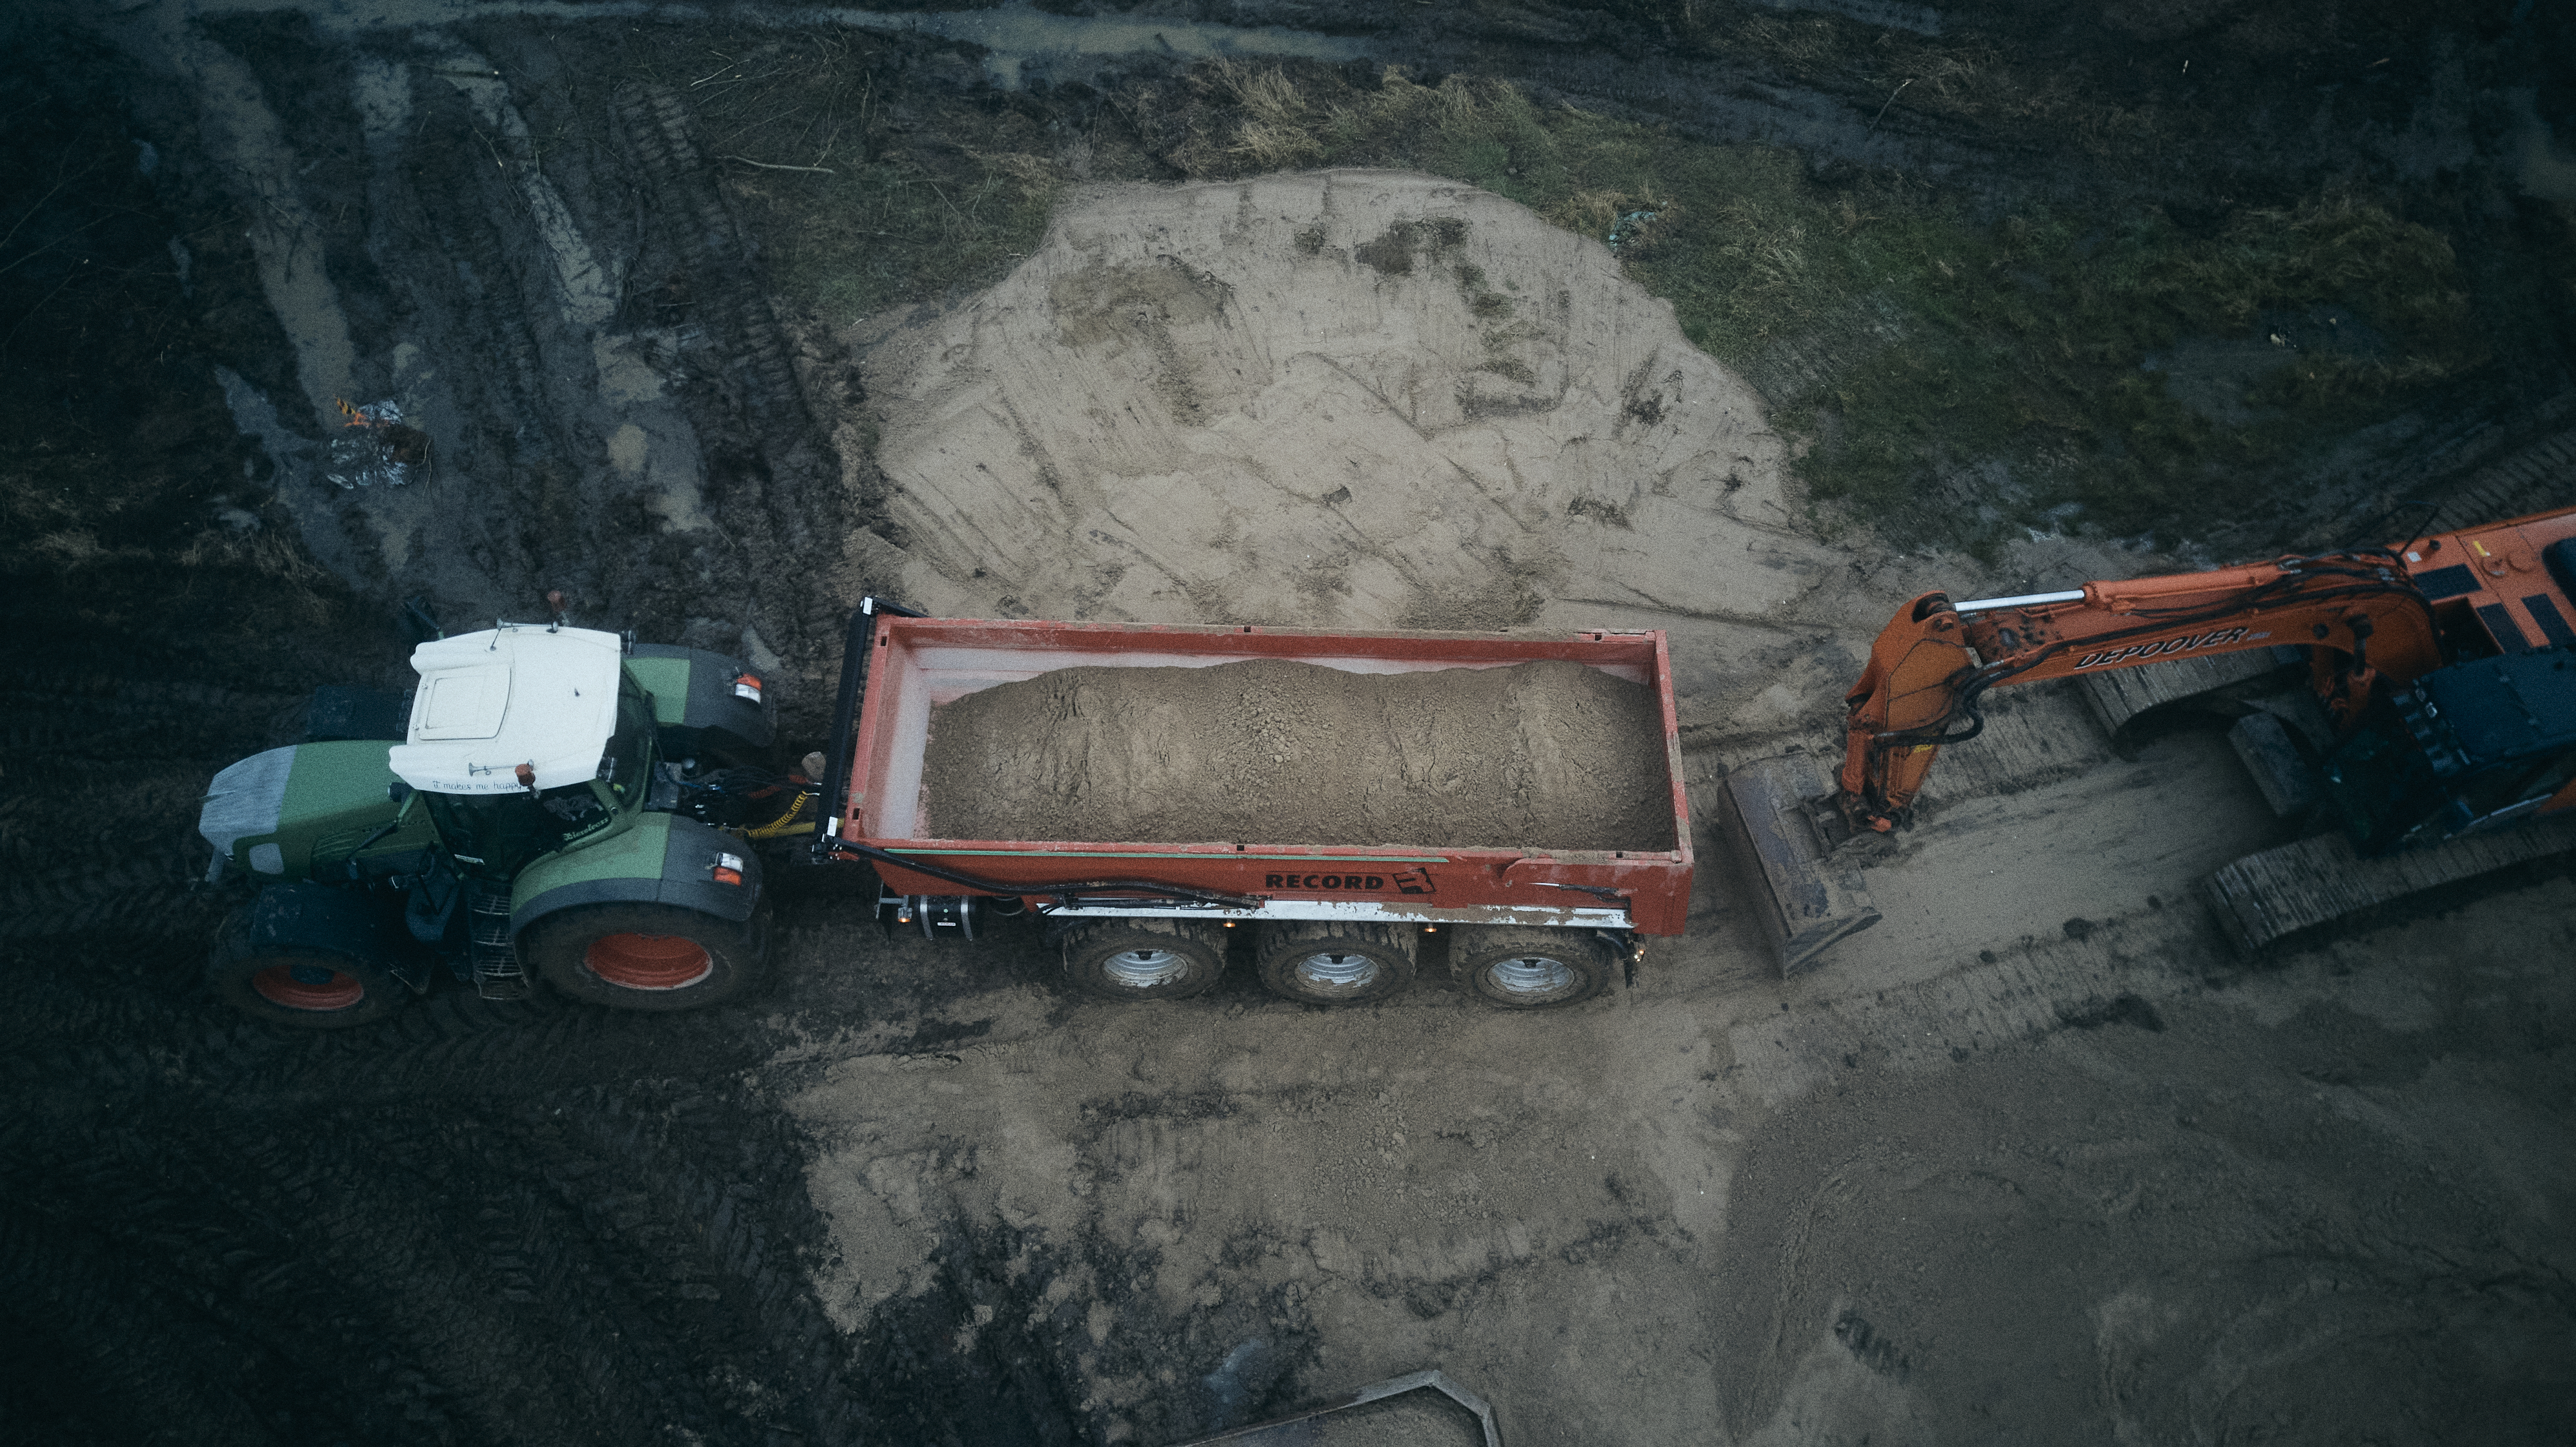 crane puts sand in hopper behind tractor